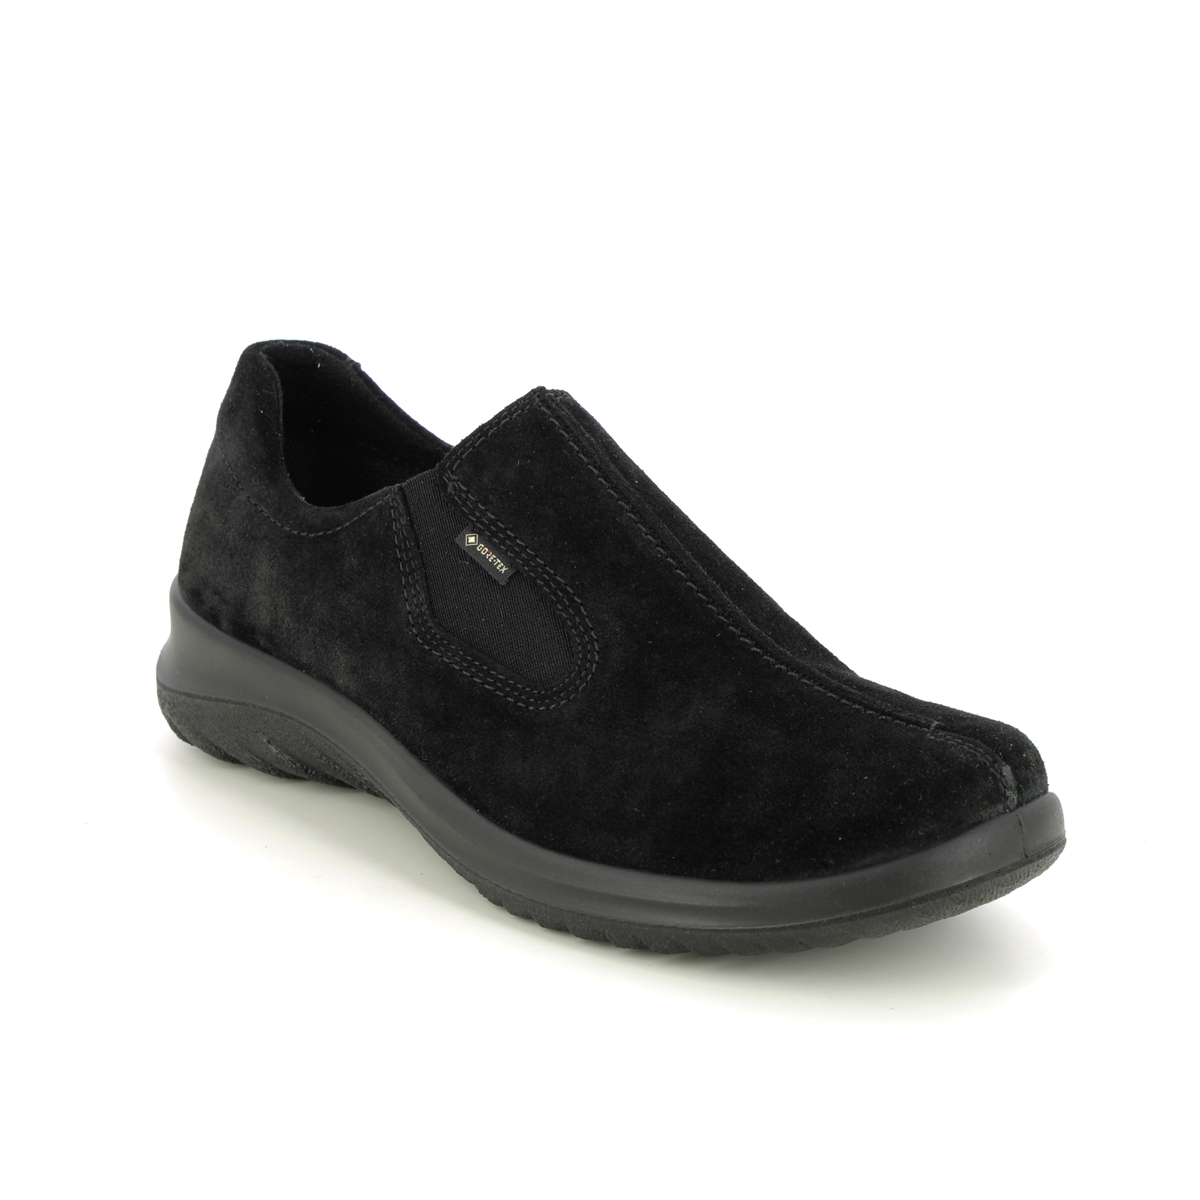 Legero Soft Shoe Gtx Black Suede Womens Comfort Slip On Shoes 2009568-0000 In Size 5 In Plain Black Suede